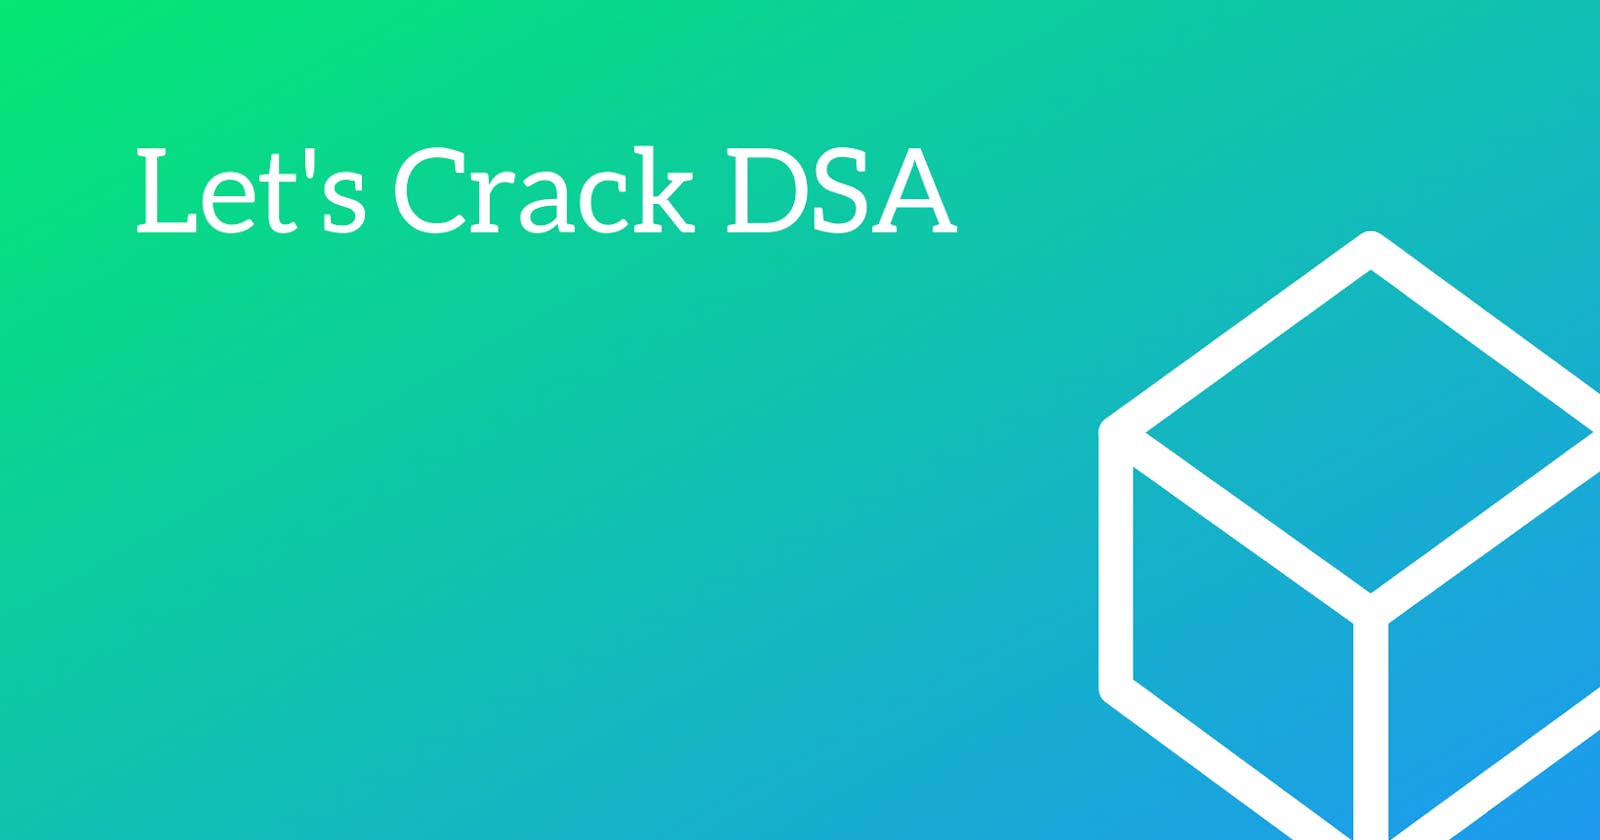 Crack DSA with me - P1